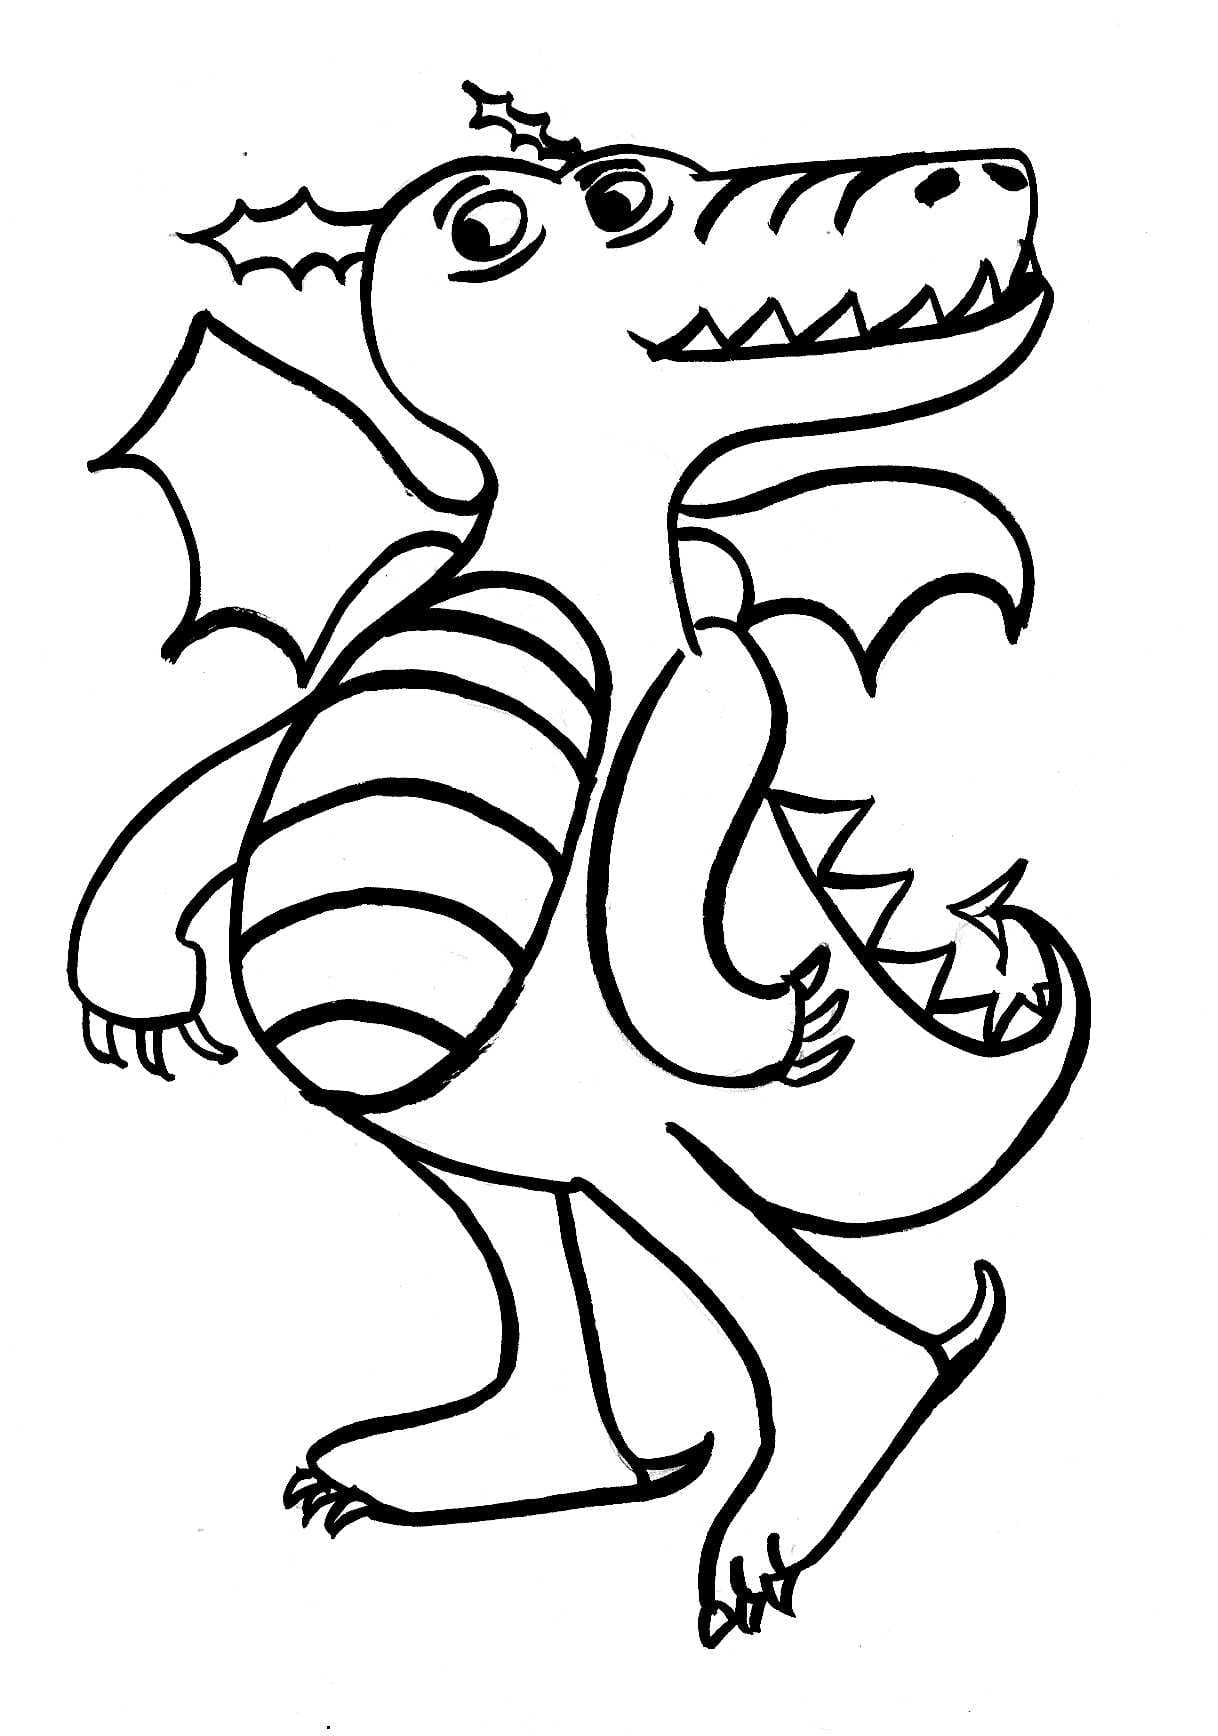 Beau Dragon coloring page